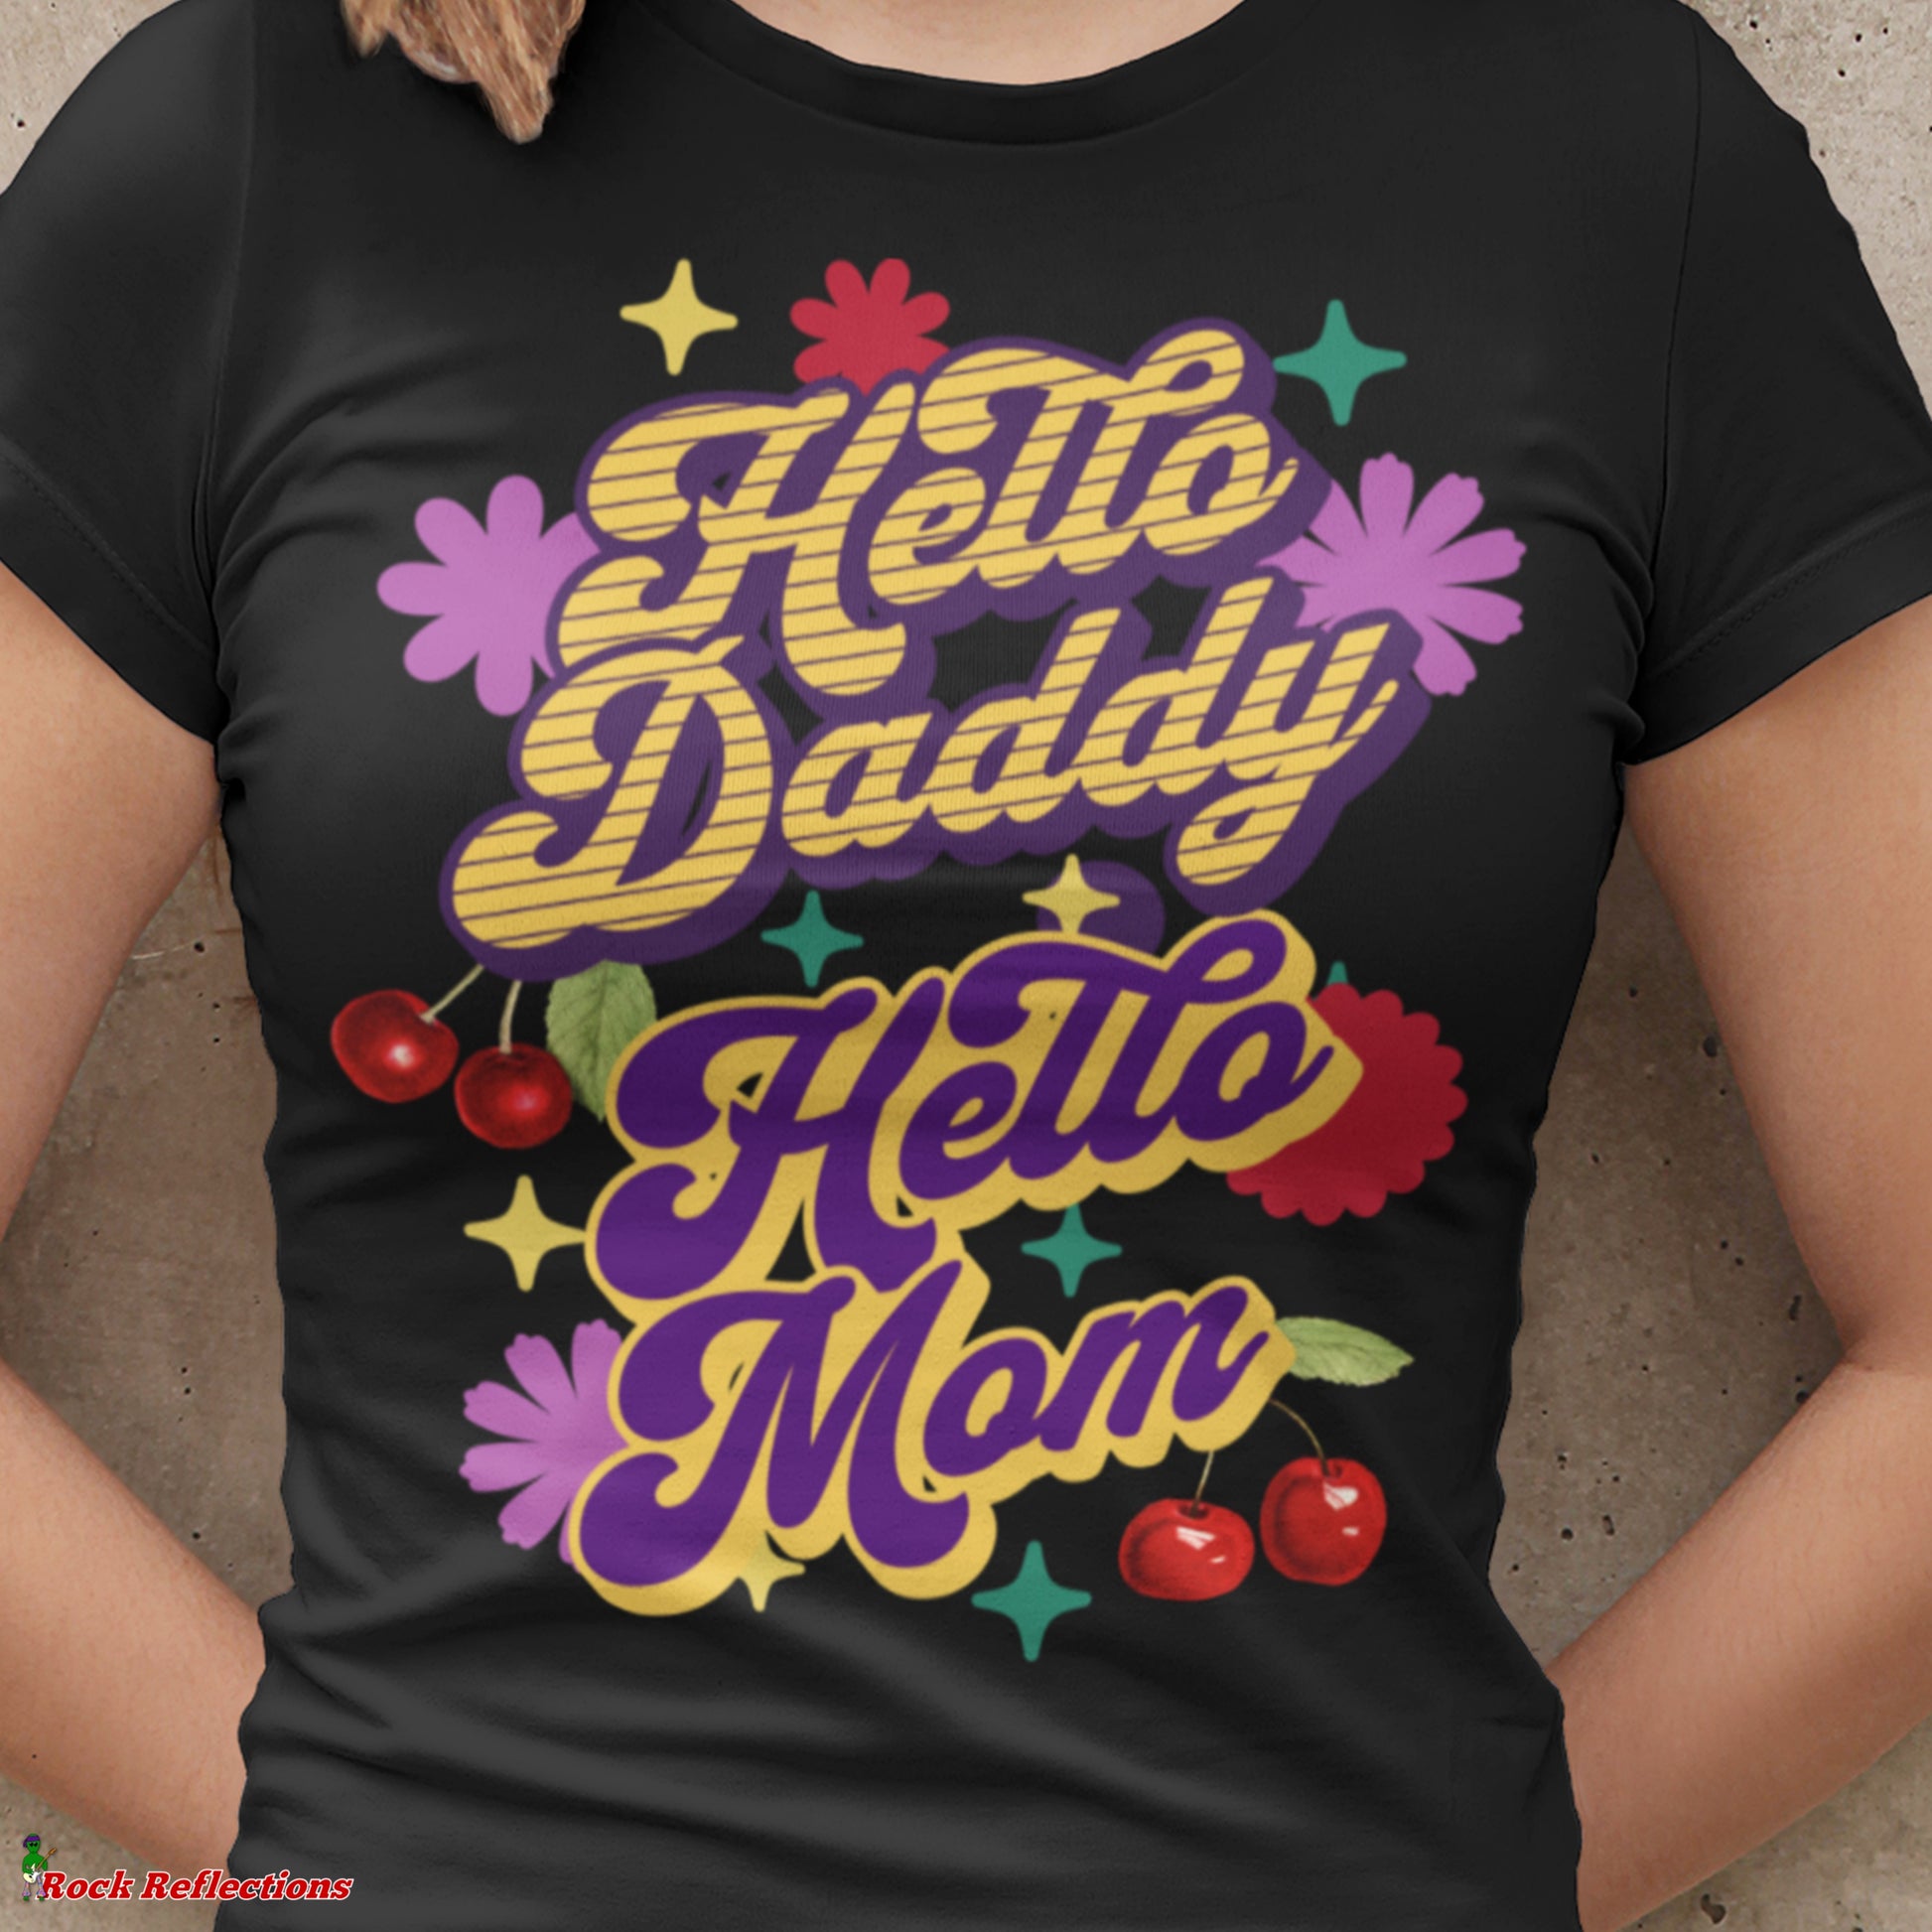 Hello Daddy Hello Mom T-Shirt SPOD